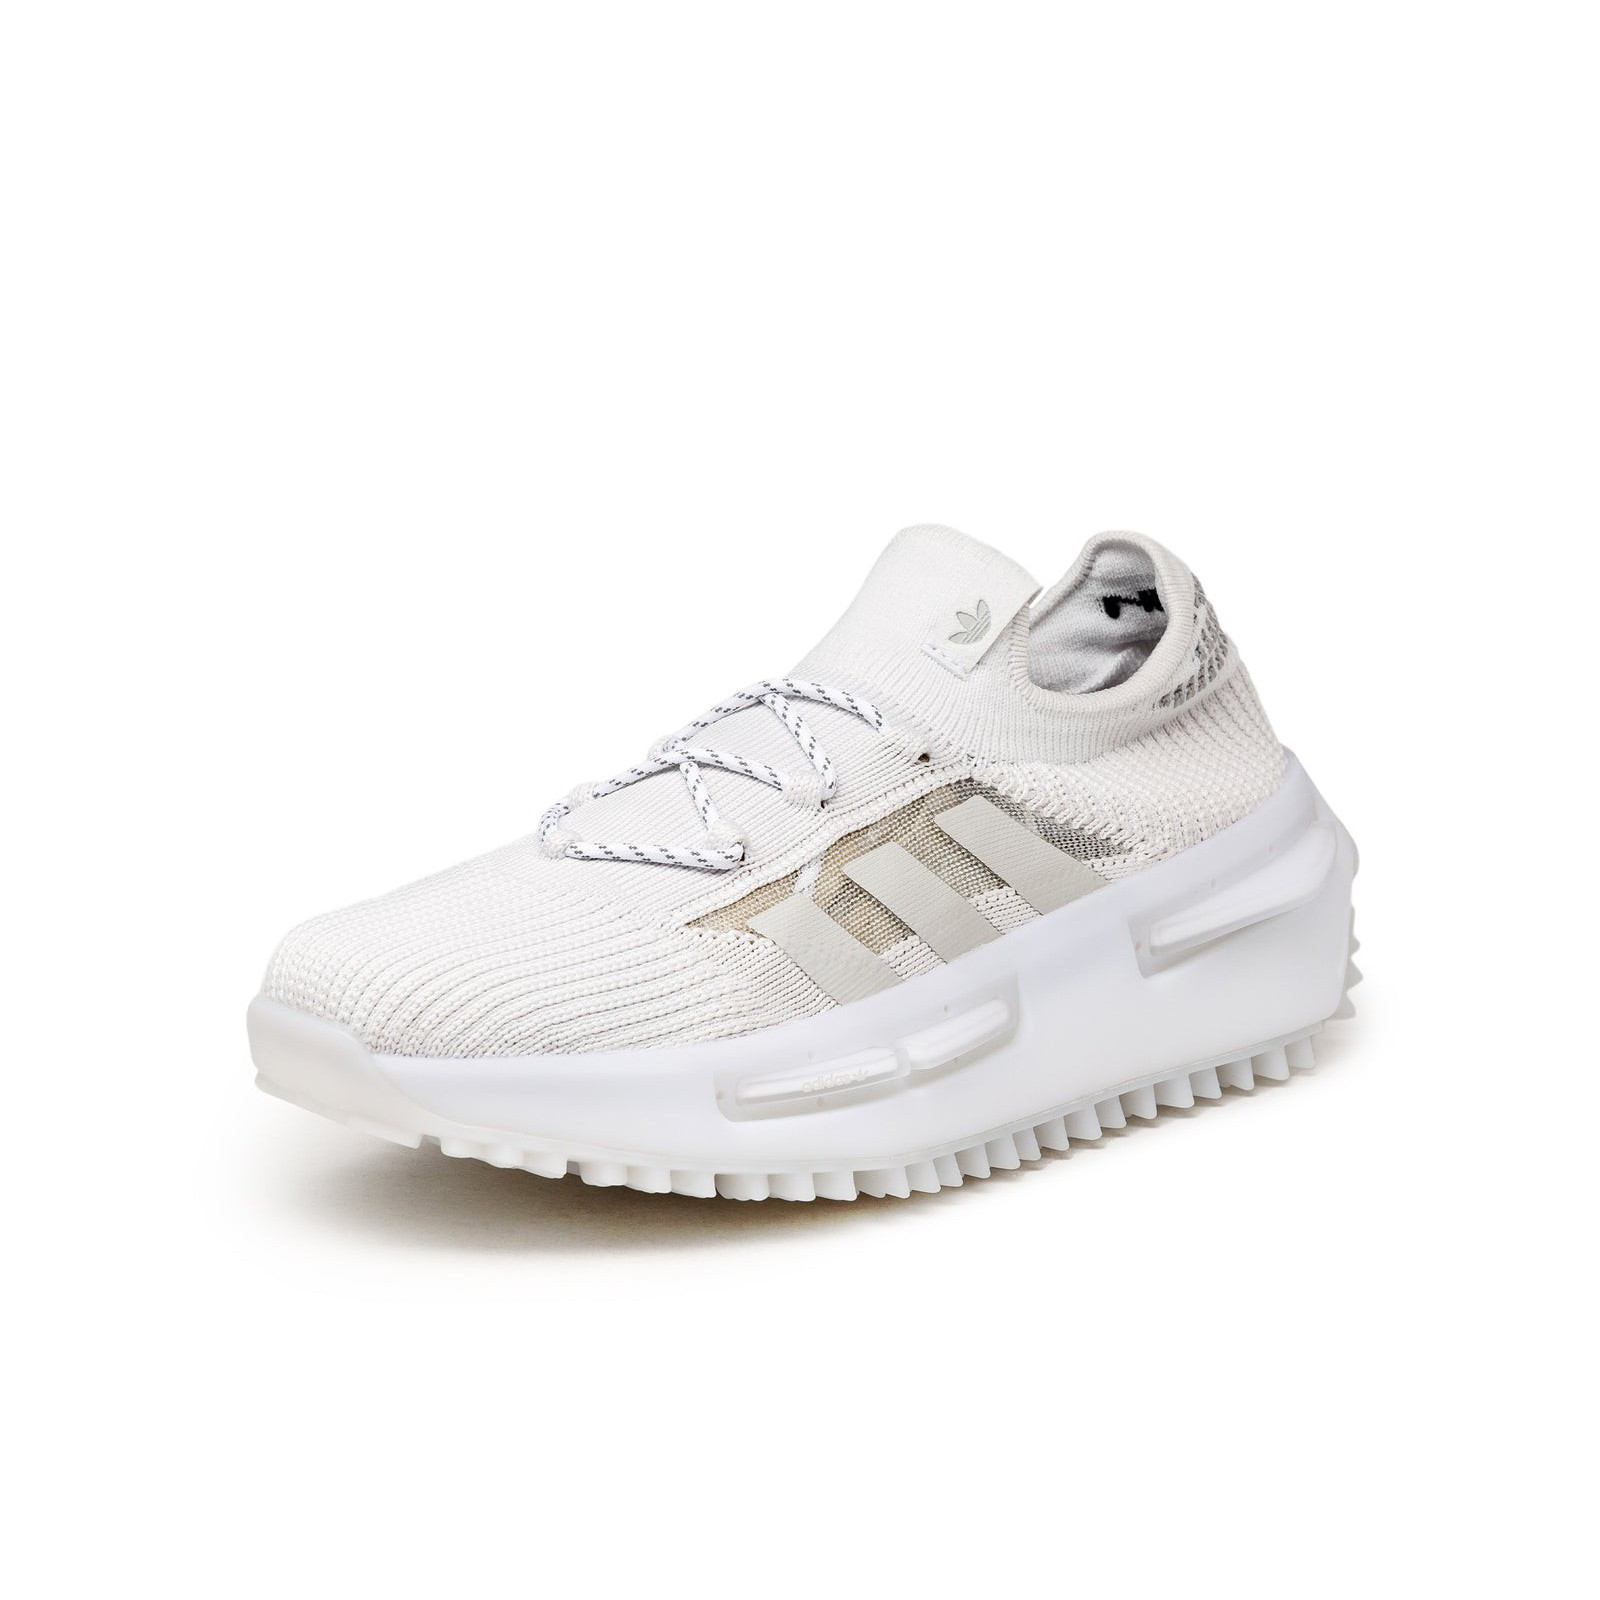 Adidas NMD_S1
Footwear White / Grey One